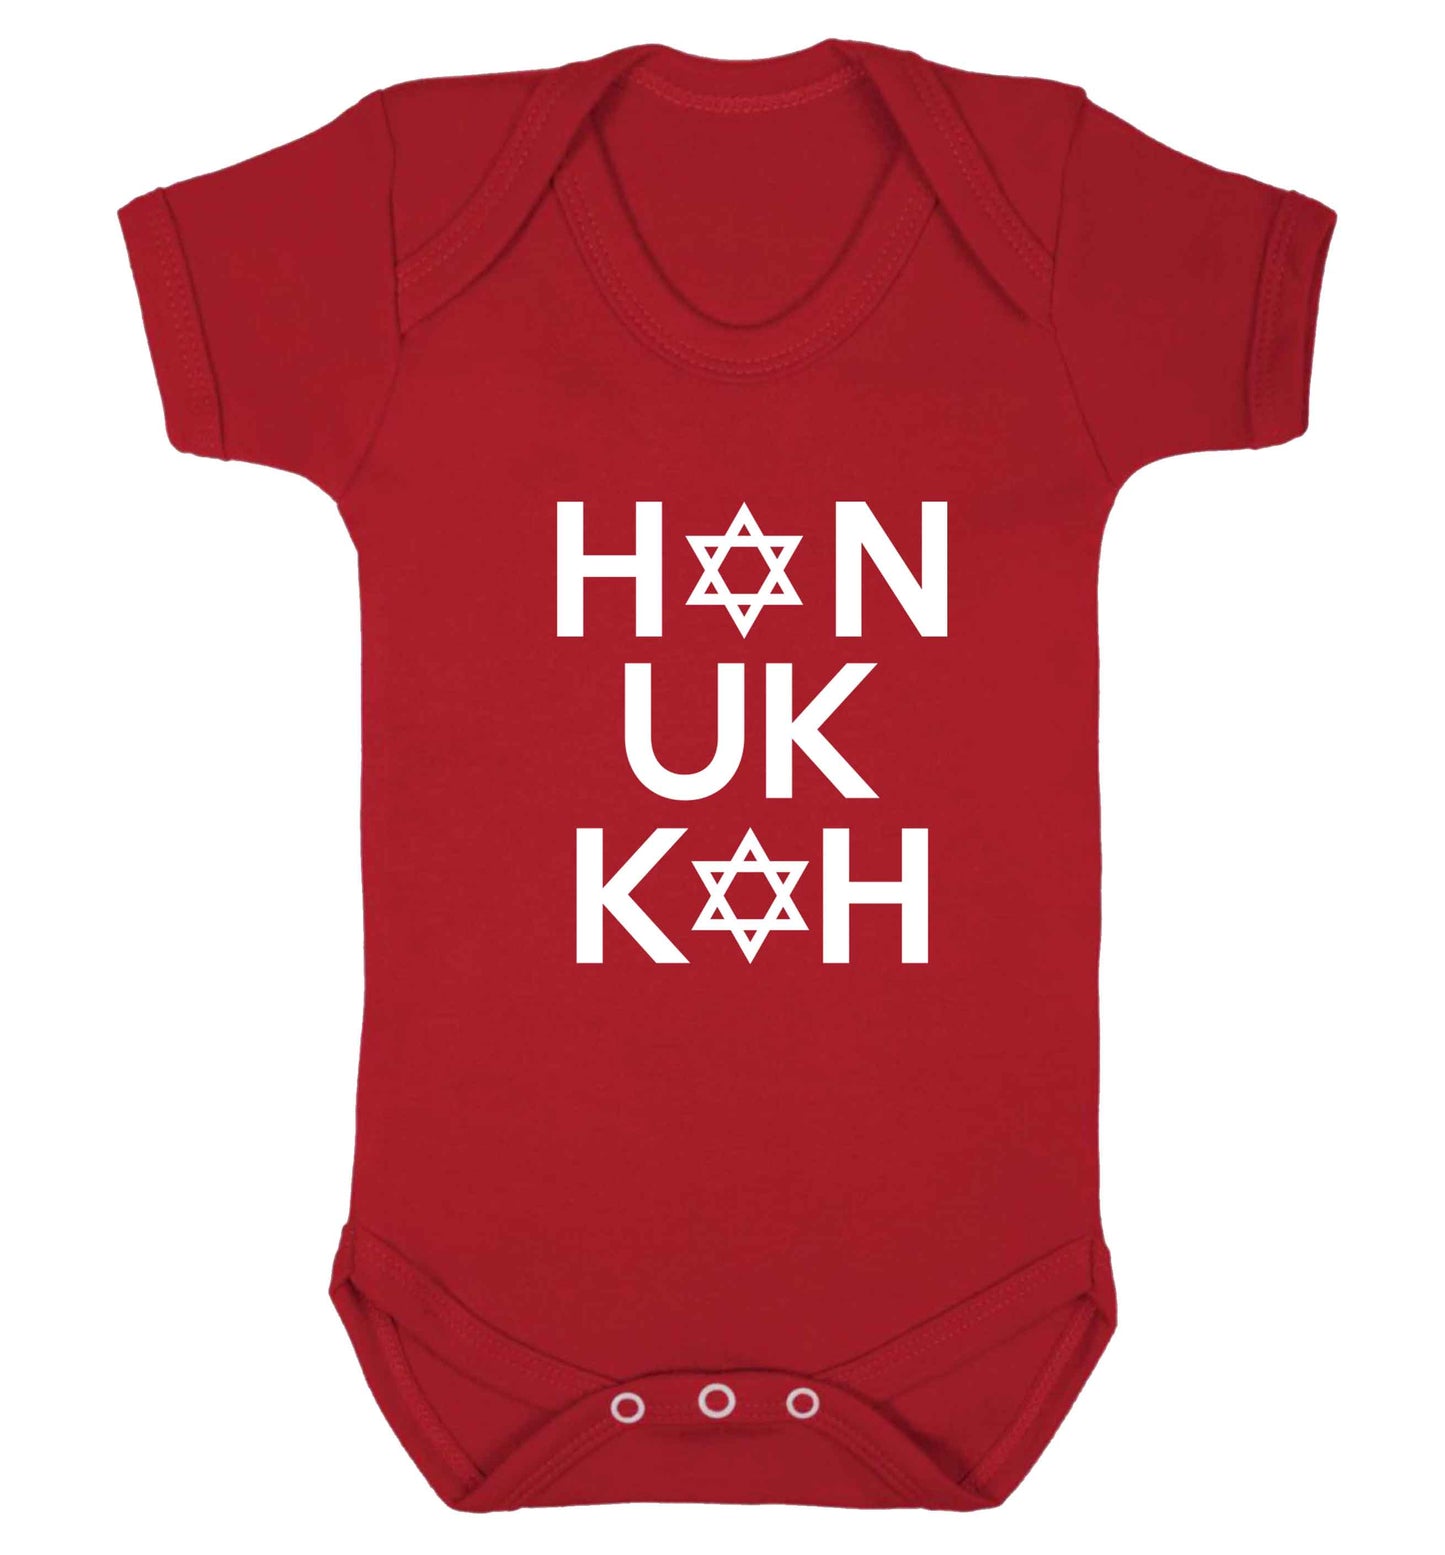 Han uk kah  Hanukkah star of david baby vest red 18-24 months